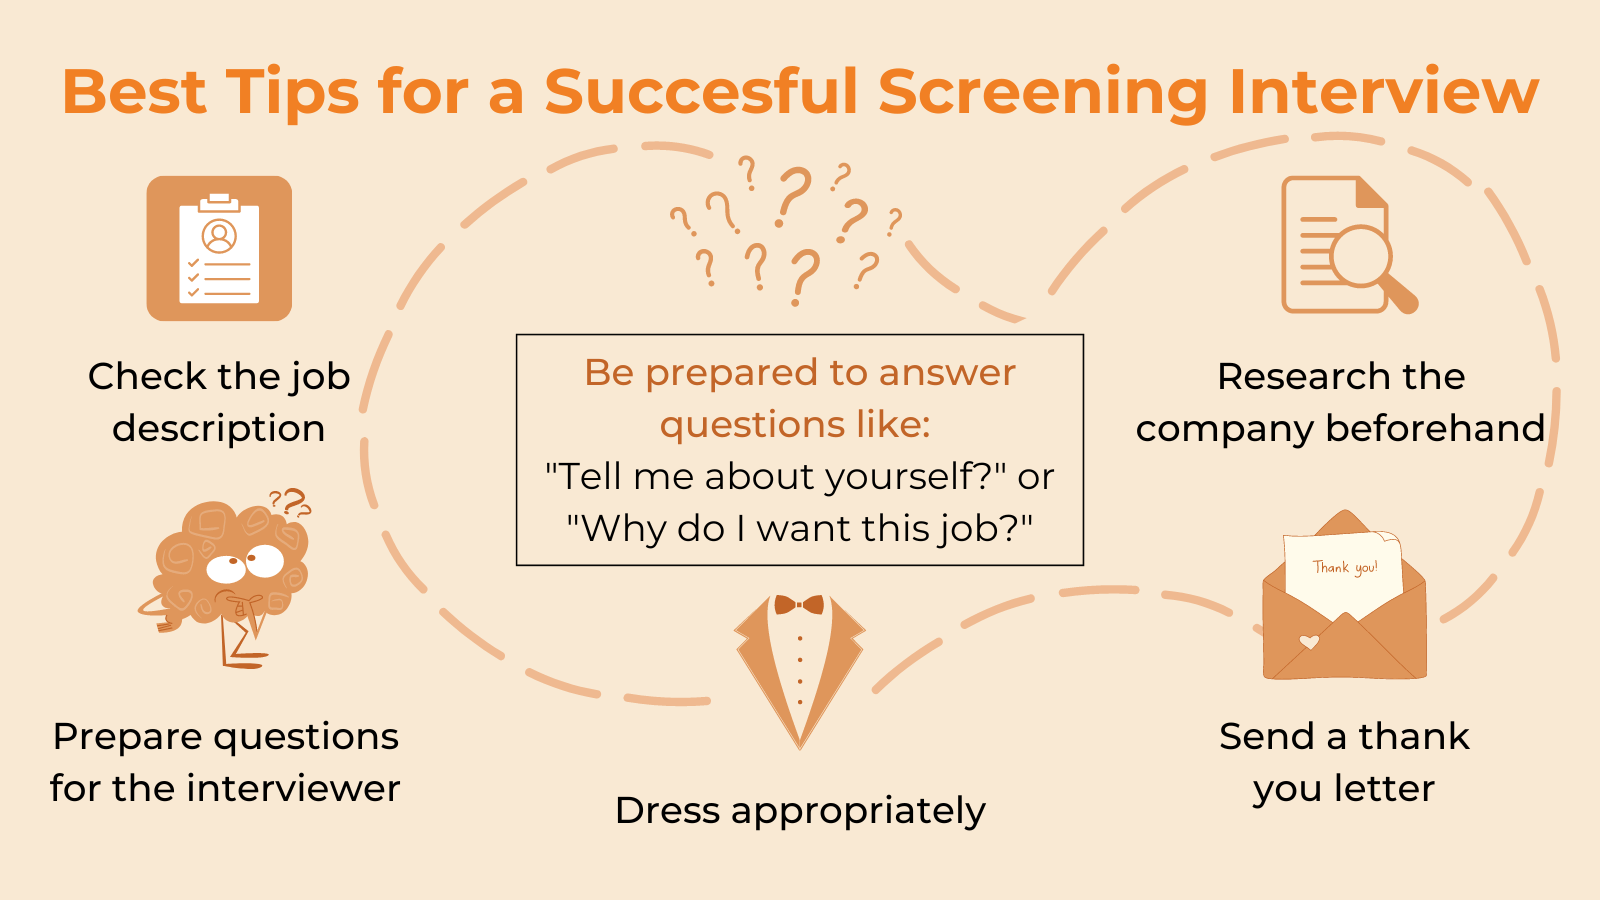 Best Tips on Preparing for Screening Interviews